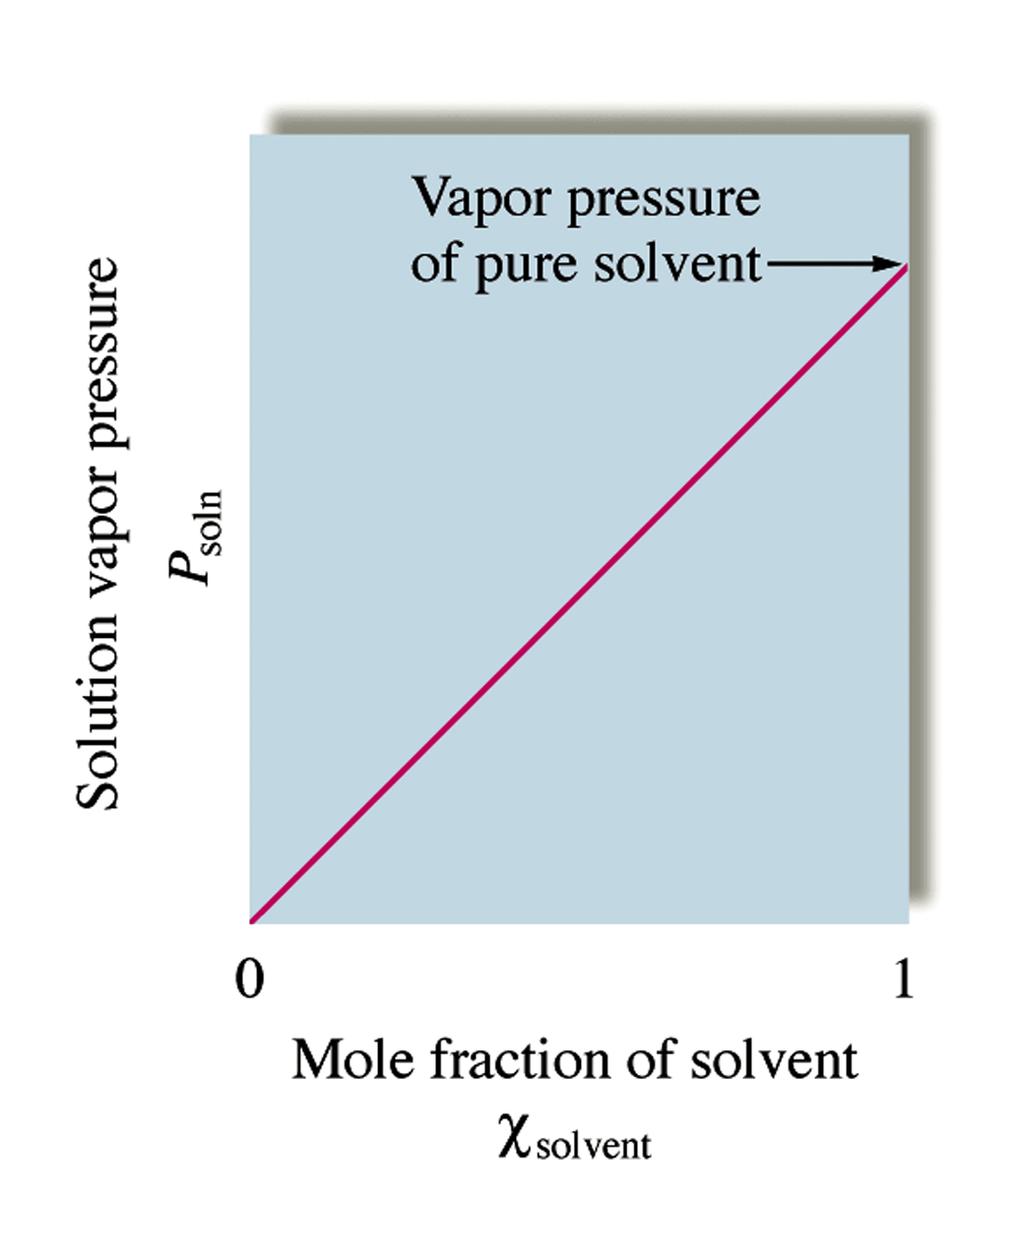 Raoult 의법칙 : 비휘발성용질을가지고있는용액의증기압은존재하는용매의몰분율에정비례 P 용액 = 용매 P 용매 P 용액 = 용액의증기압 (atm) 용매 =